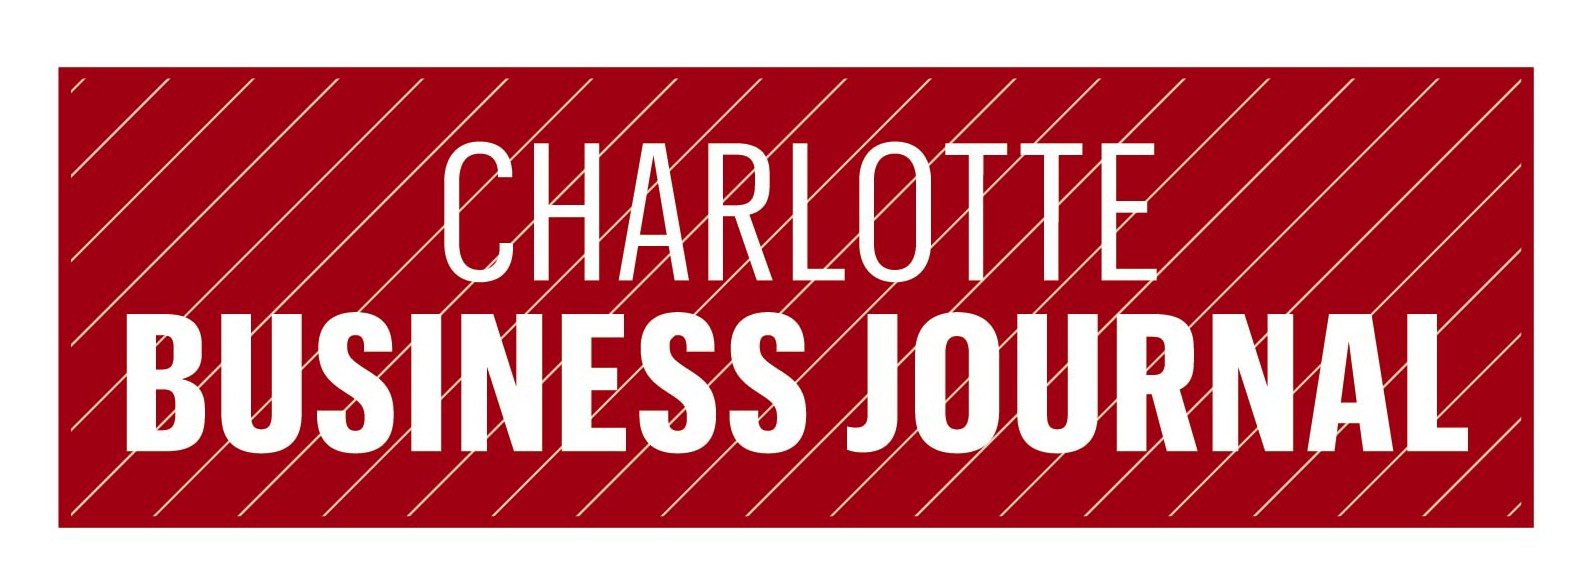  CHARLOTTE BUSINESS JOURNAL